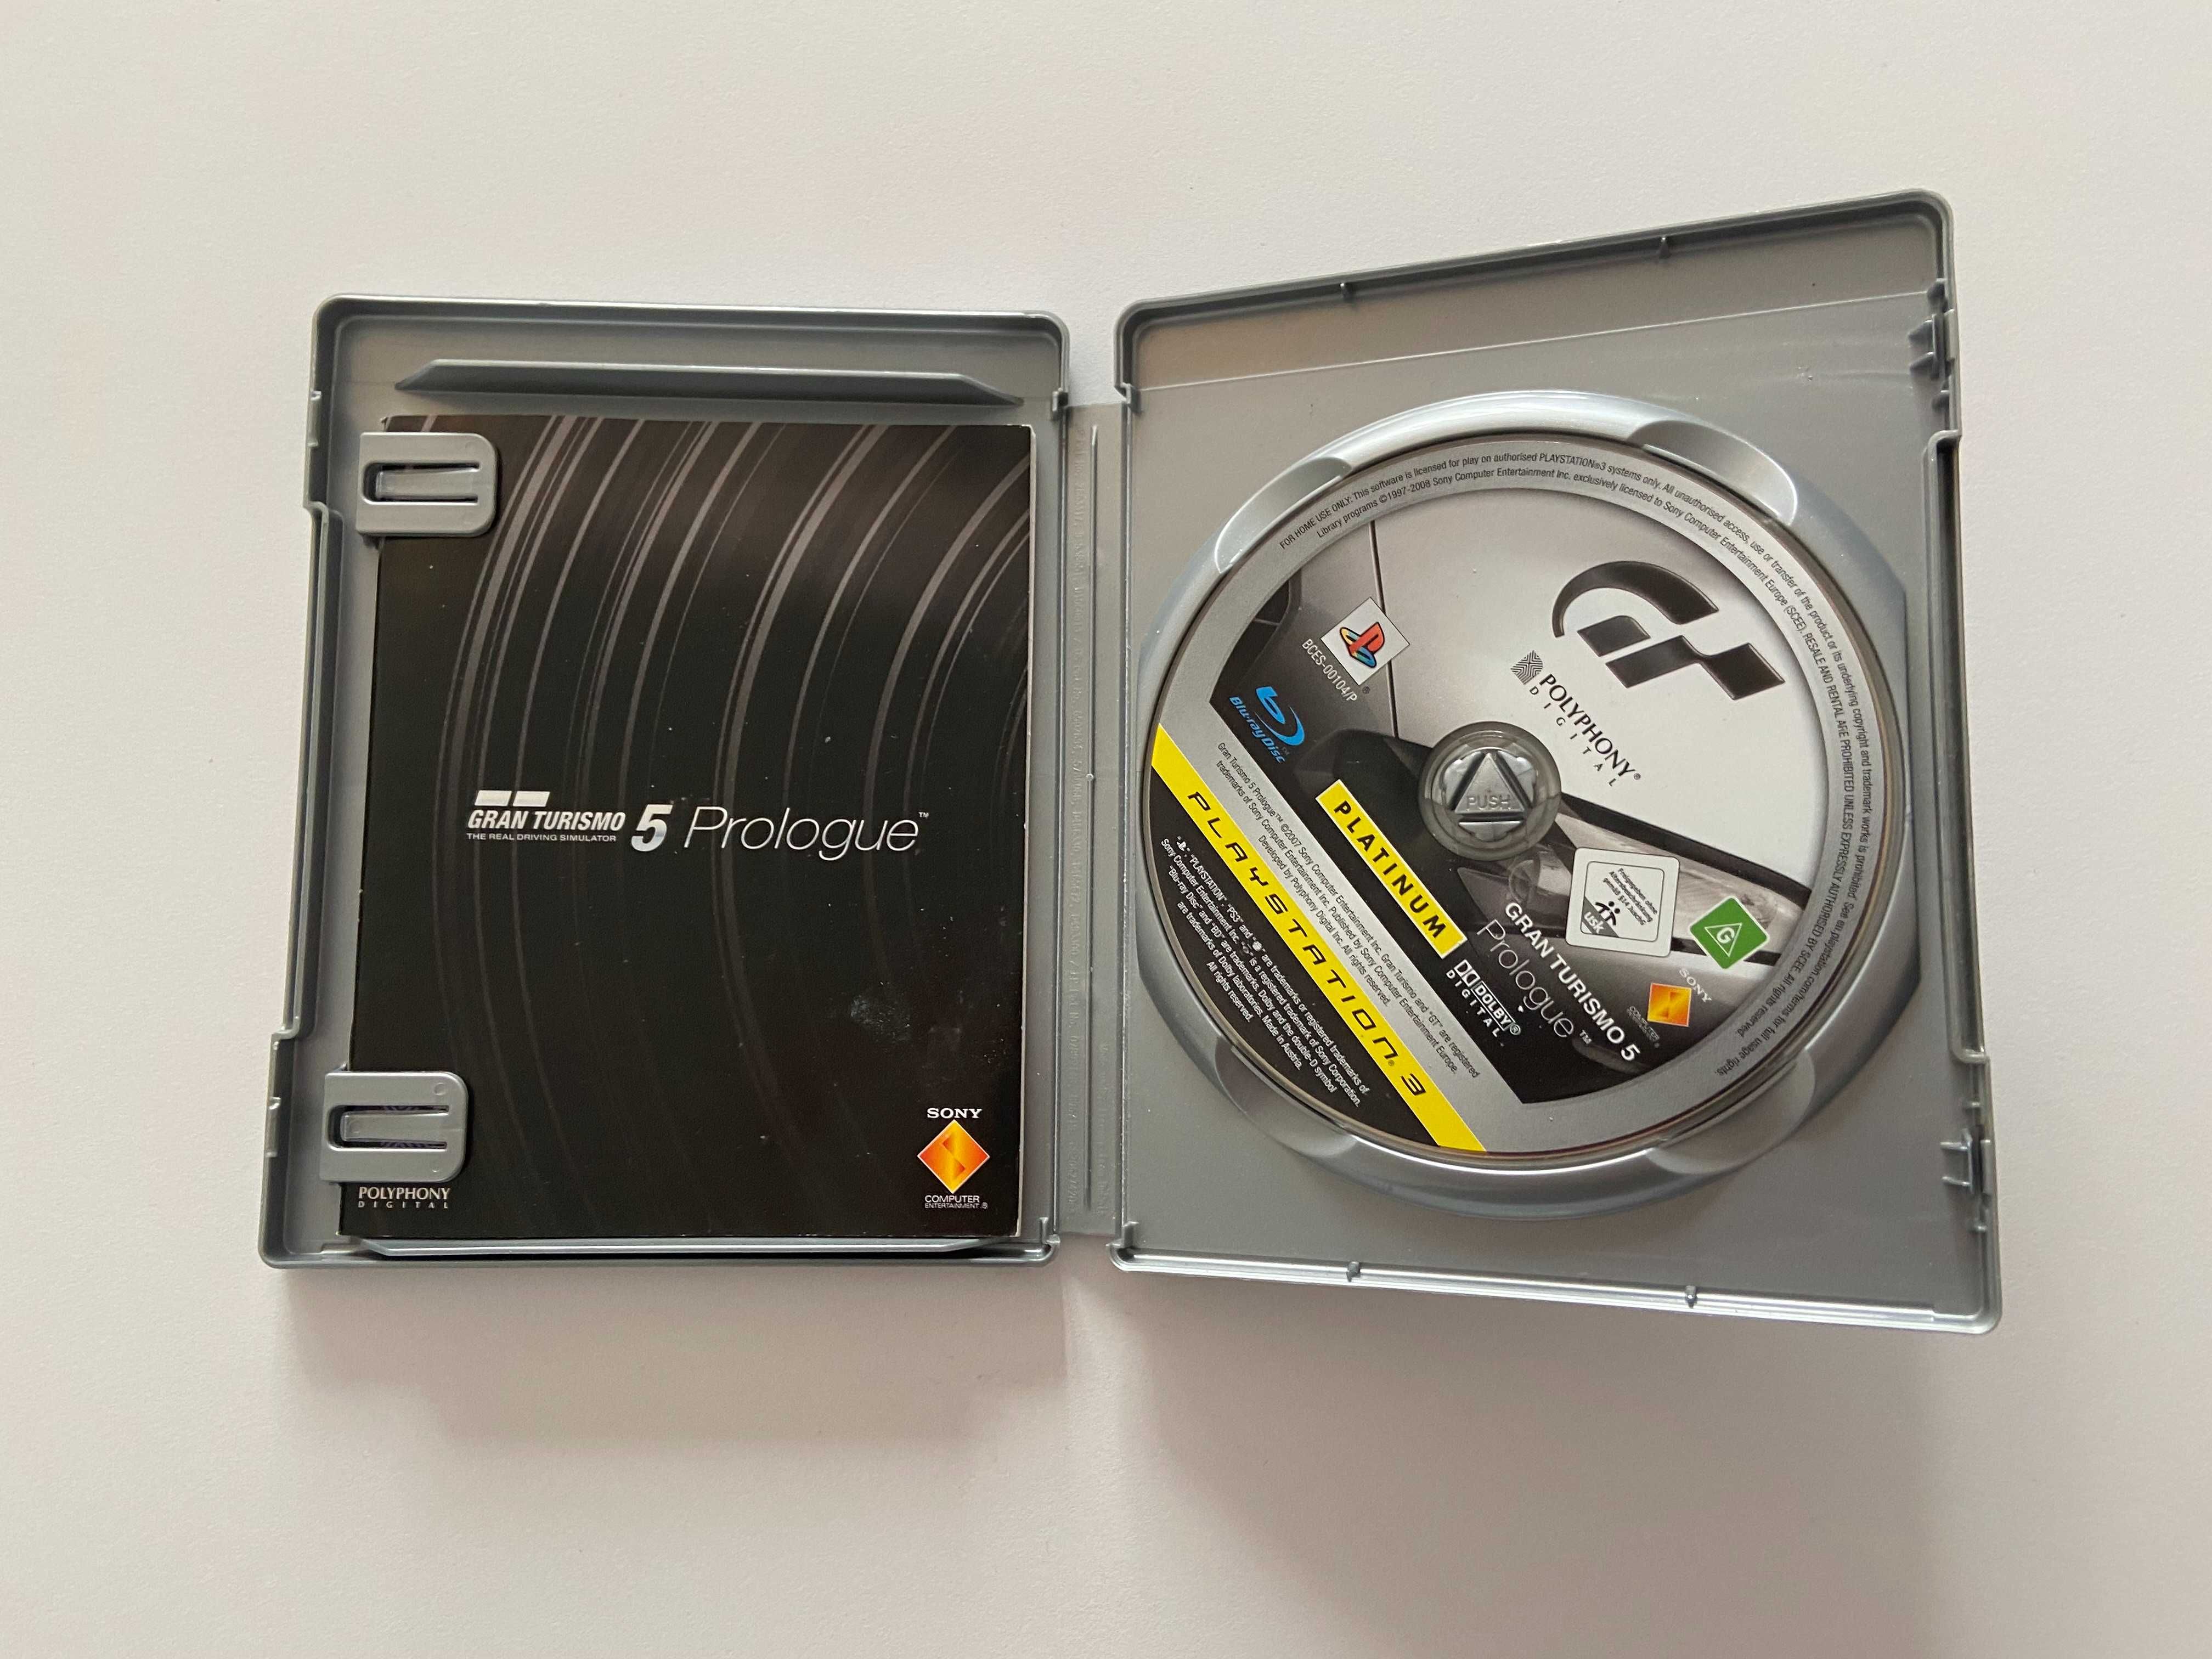 Gran Turismo 5 Prologue PS3 Gra Gt5 Prolog Playstation Sony